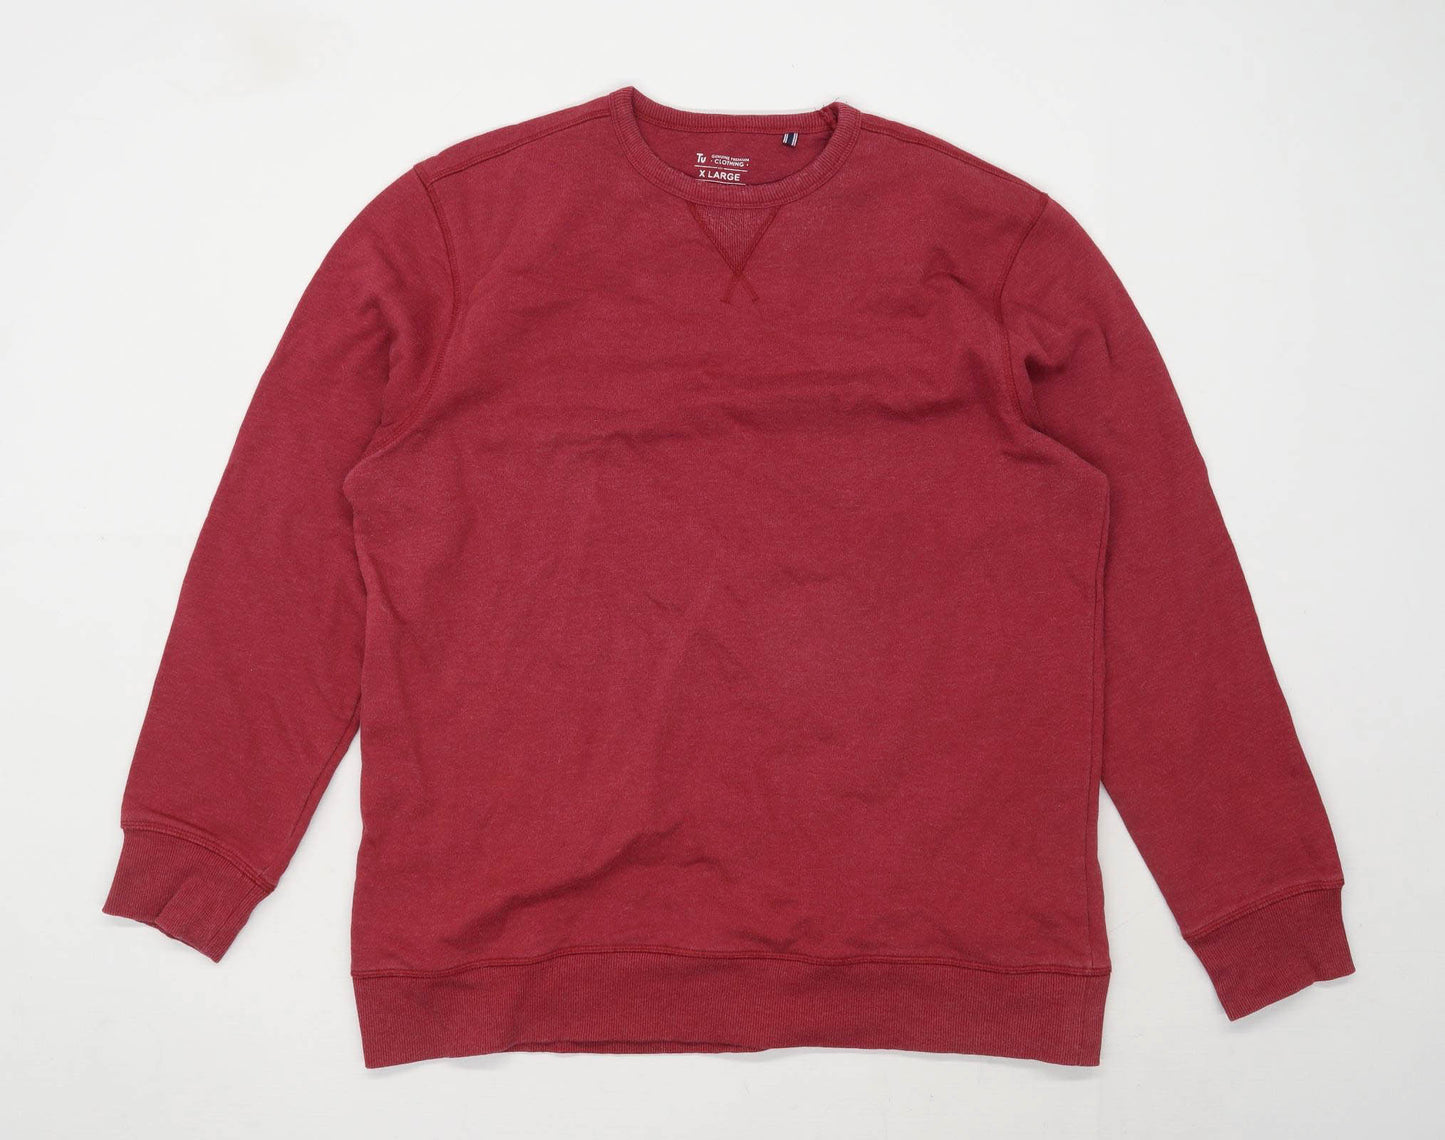 TU Mens Size XL Cotton Blend Red Sweatshirt